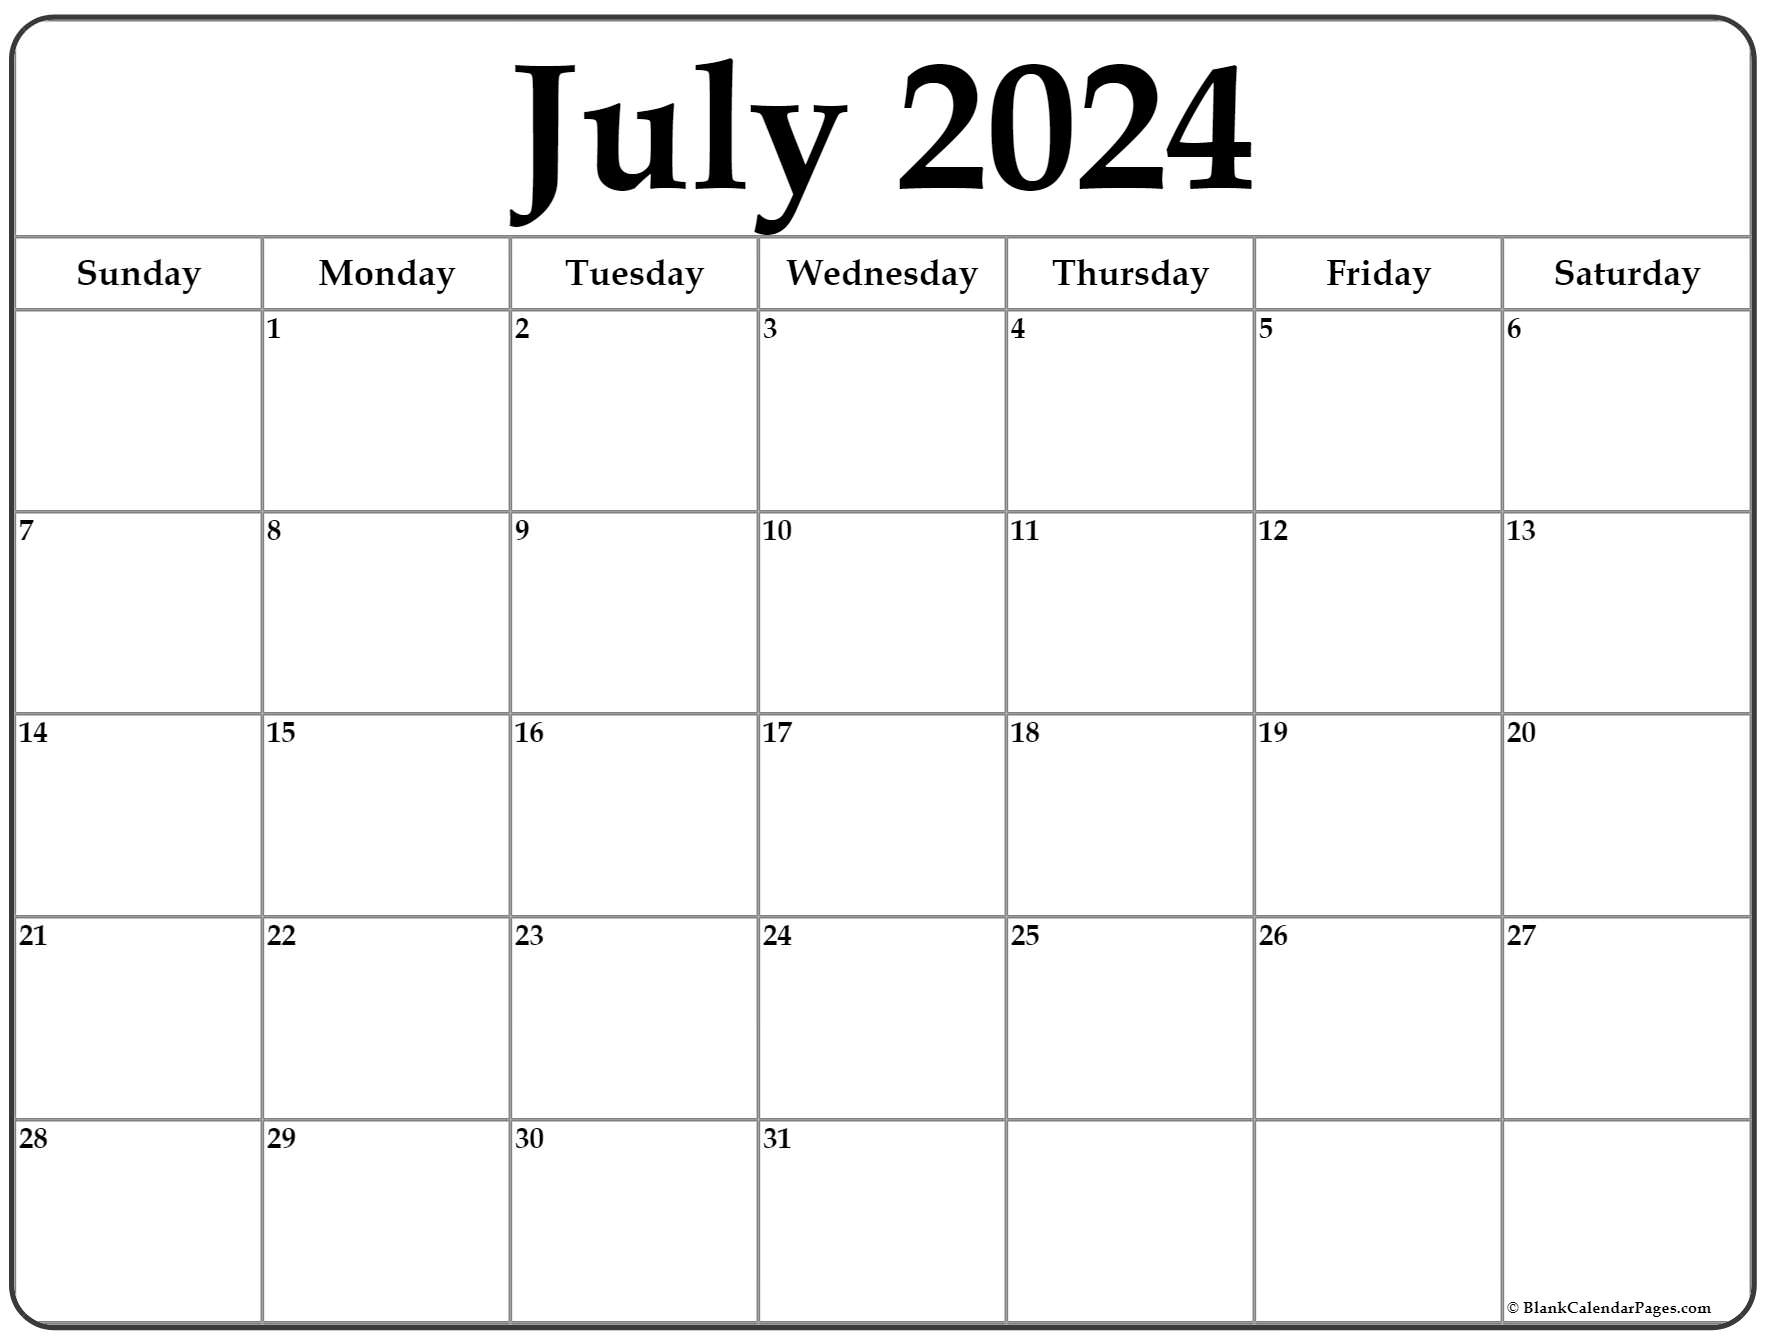 July 2024 Calendar | Free Printable Calendar pertaining to Free Printable Blank Monthly Summer Calendar 2024